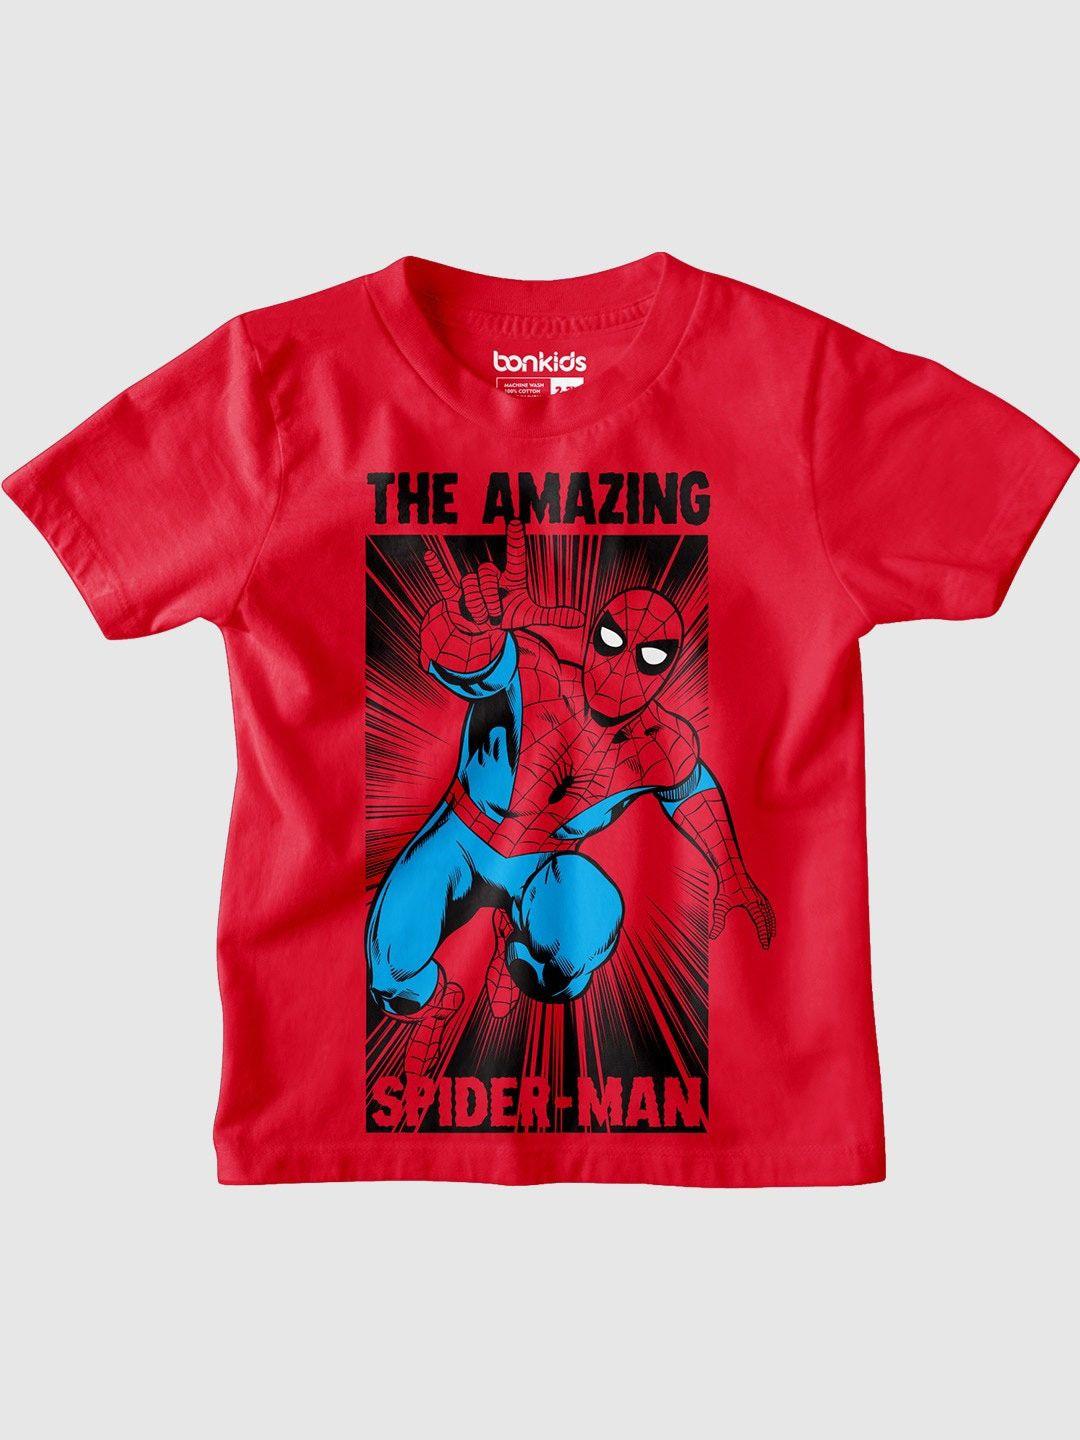 bonkids-boys-superhero-printed-spider-man-cotton-t-shirt